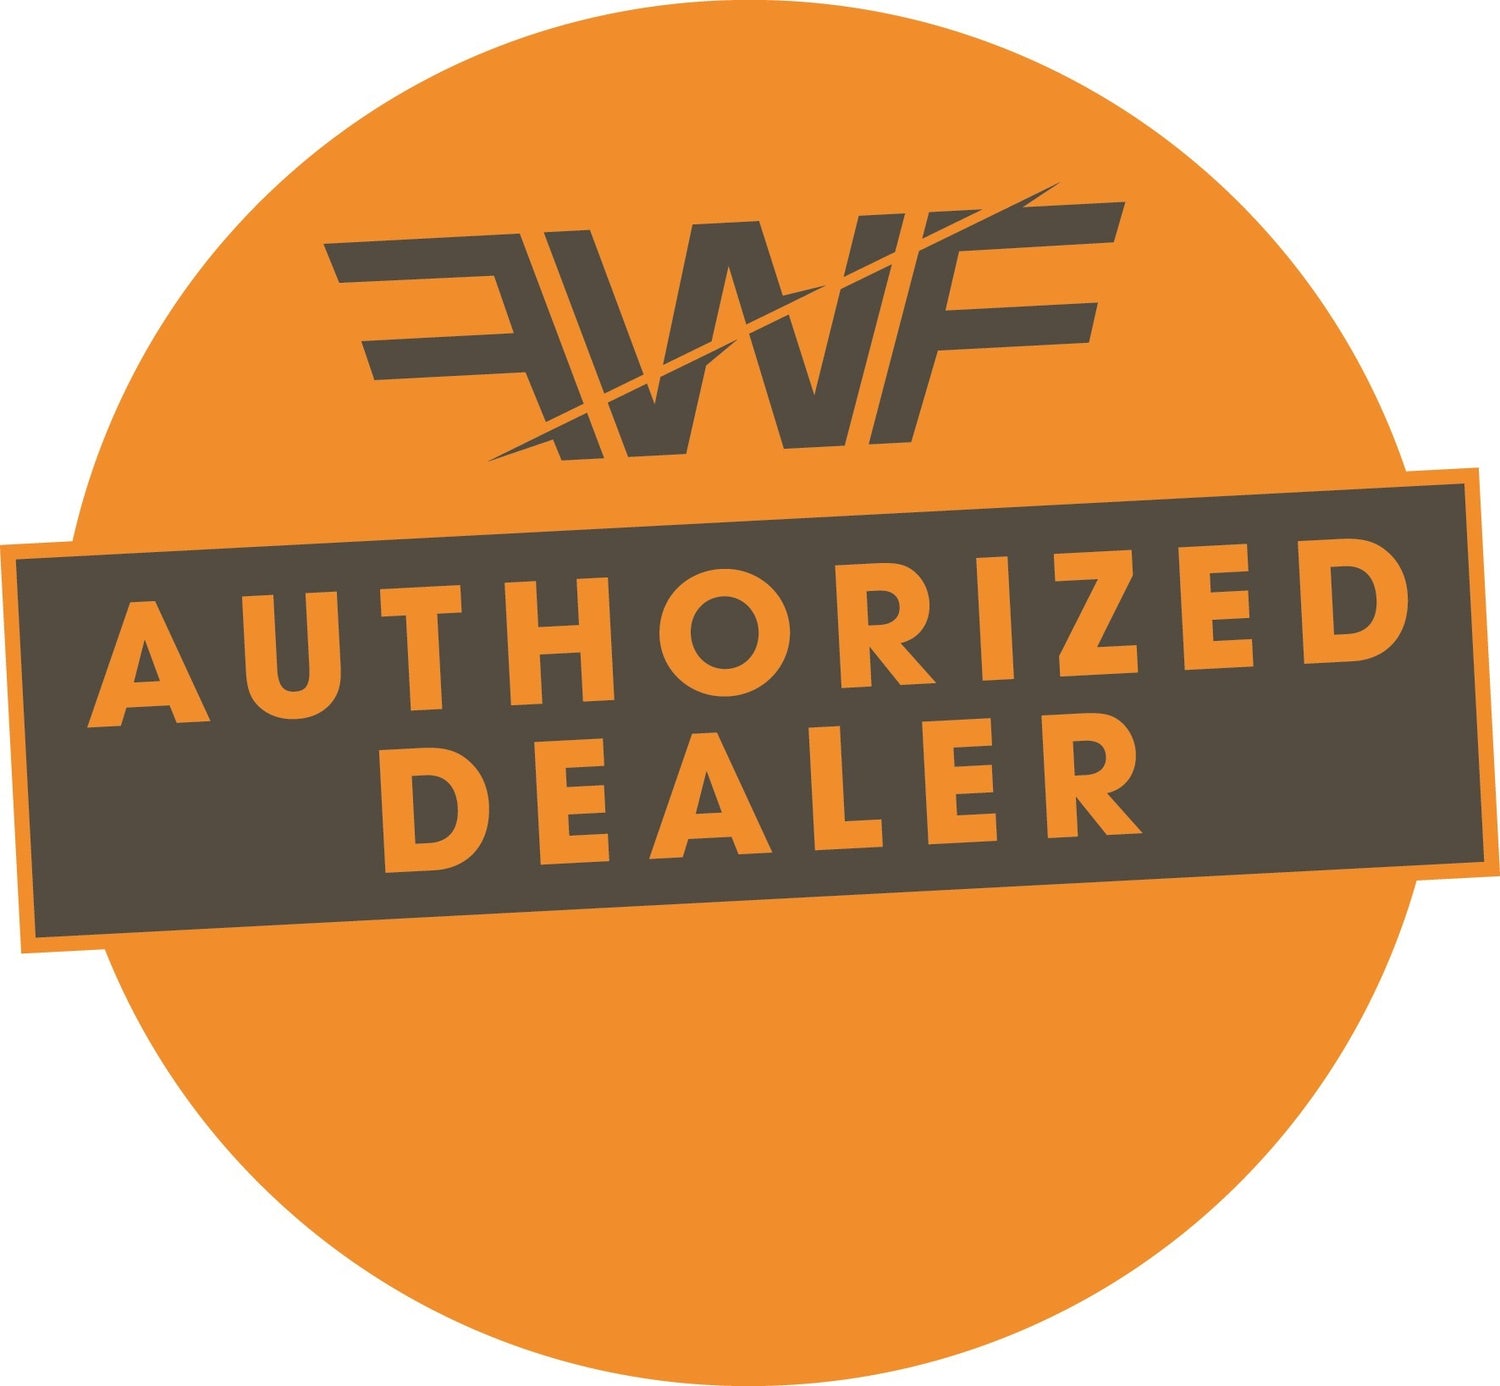 FWF authorized dealer